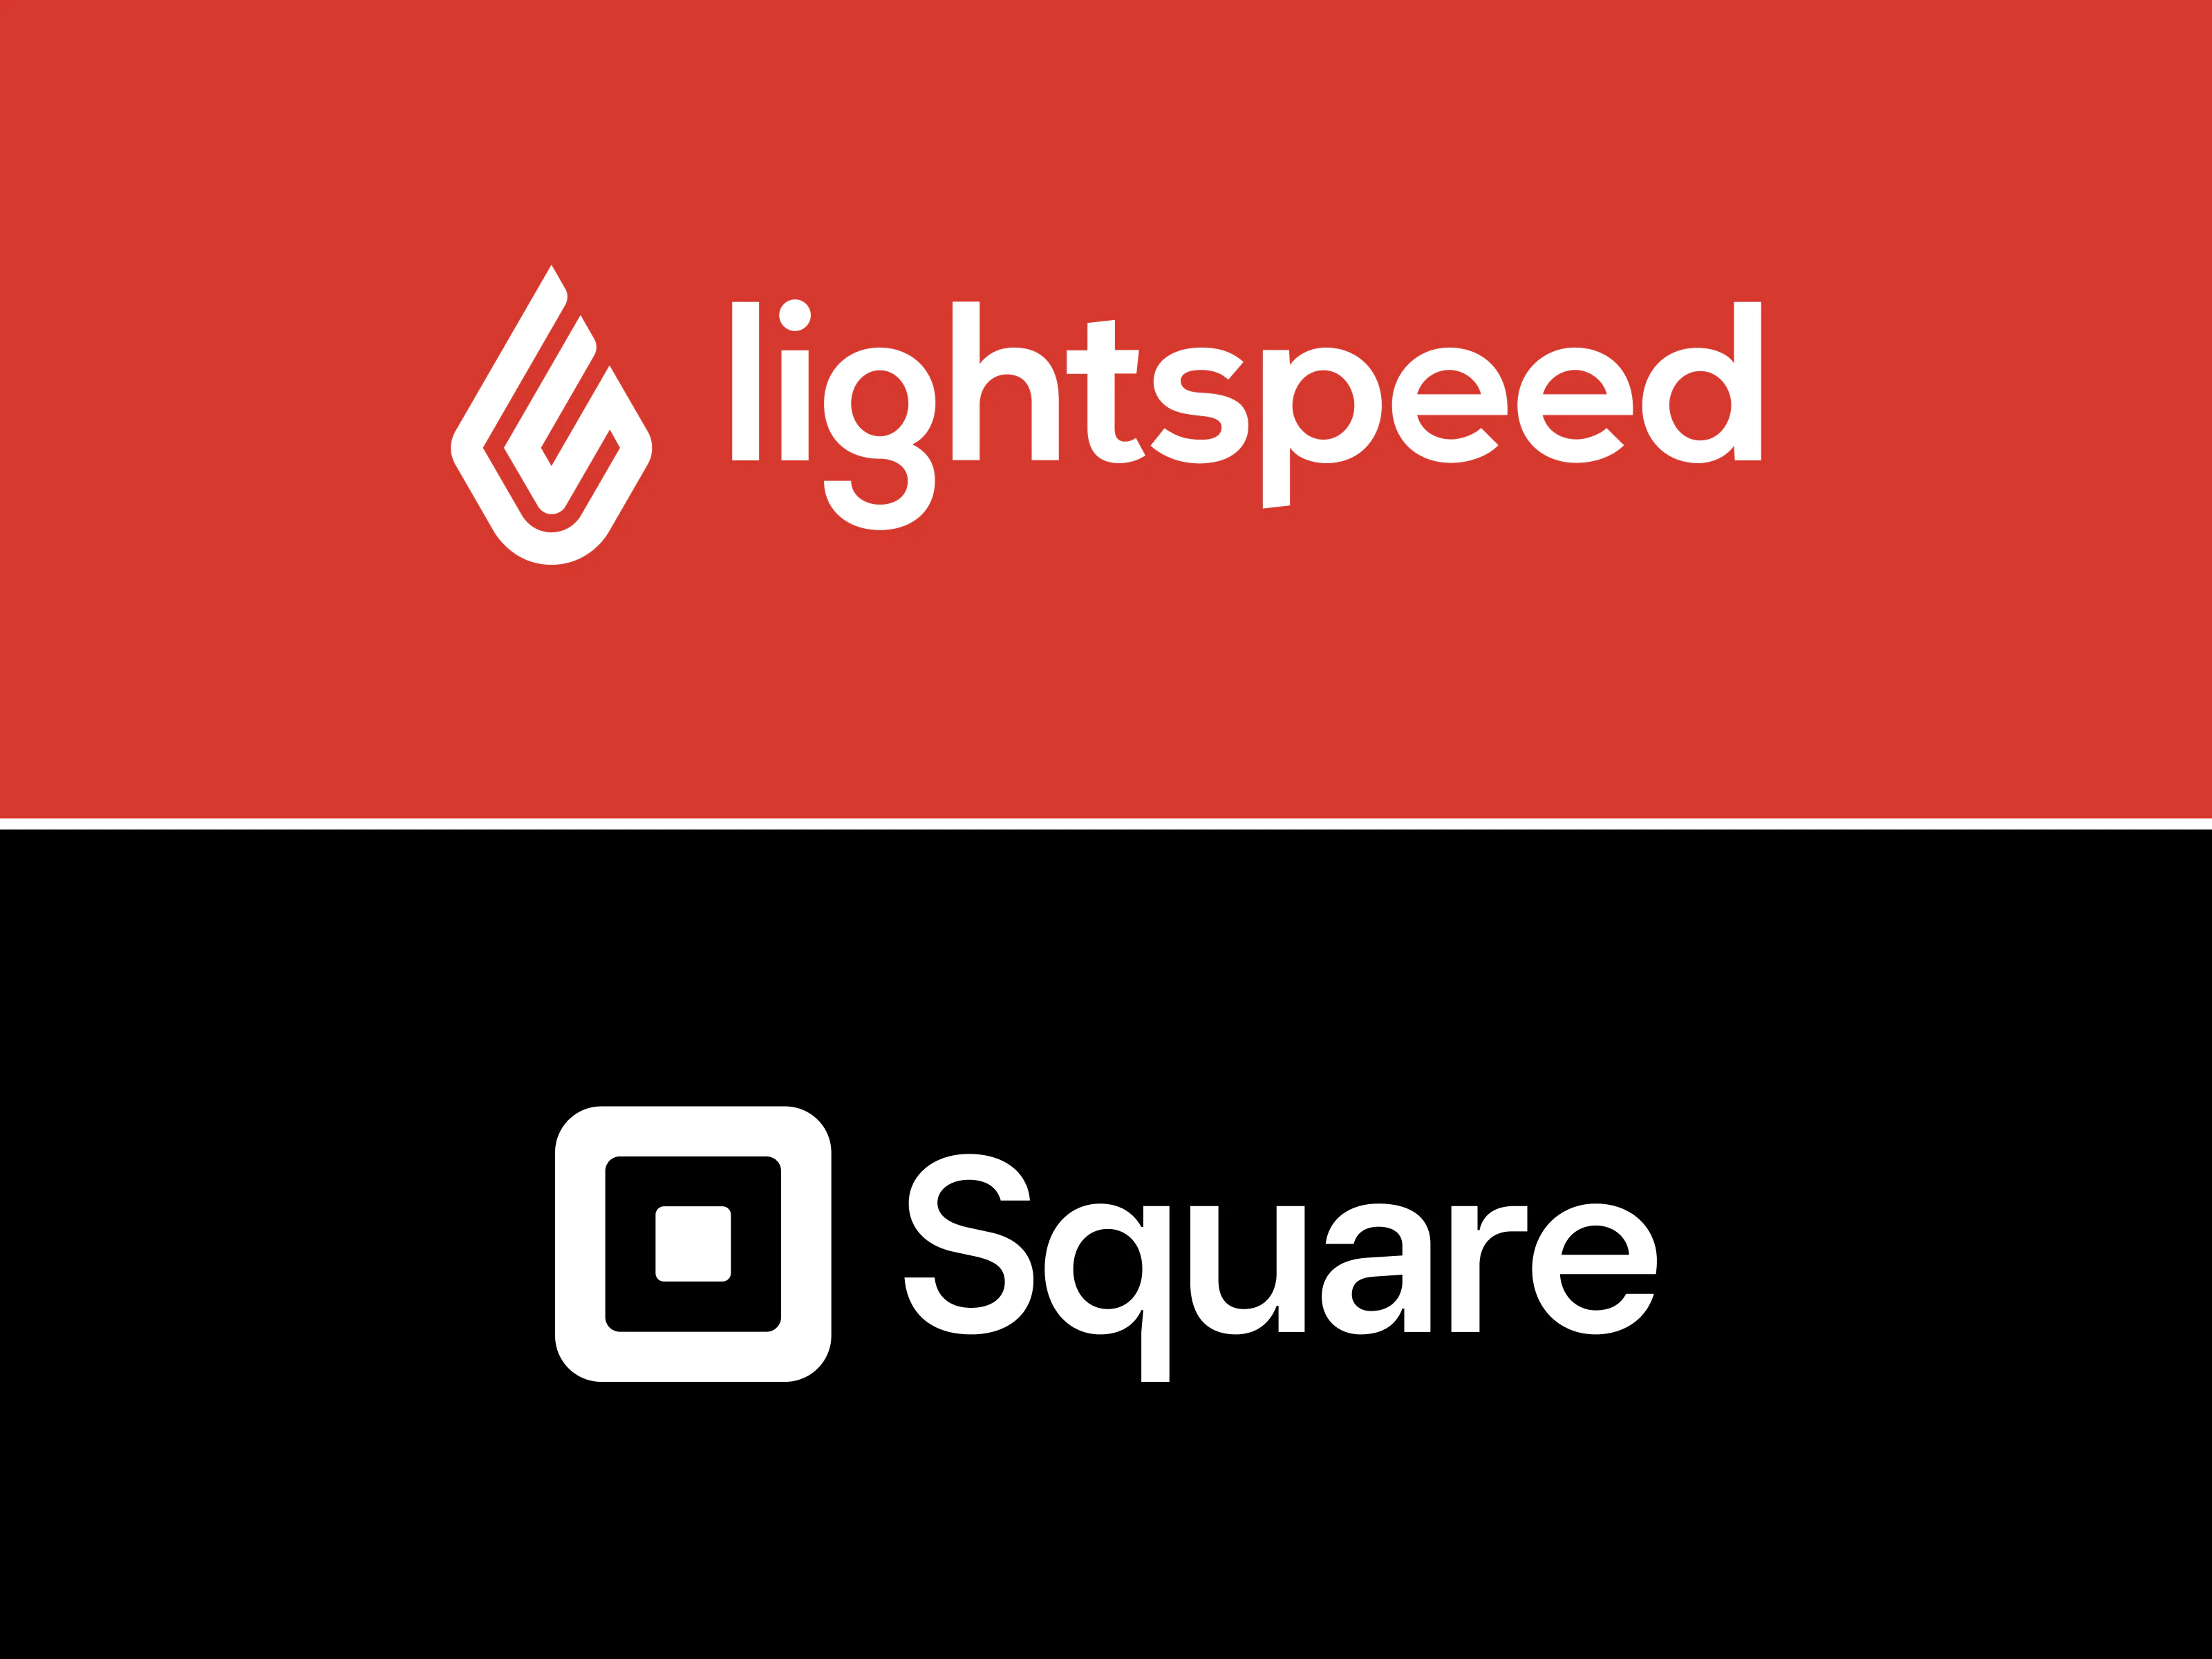 lightspeed-square-comparison